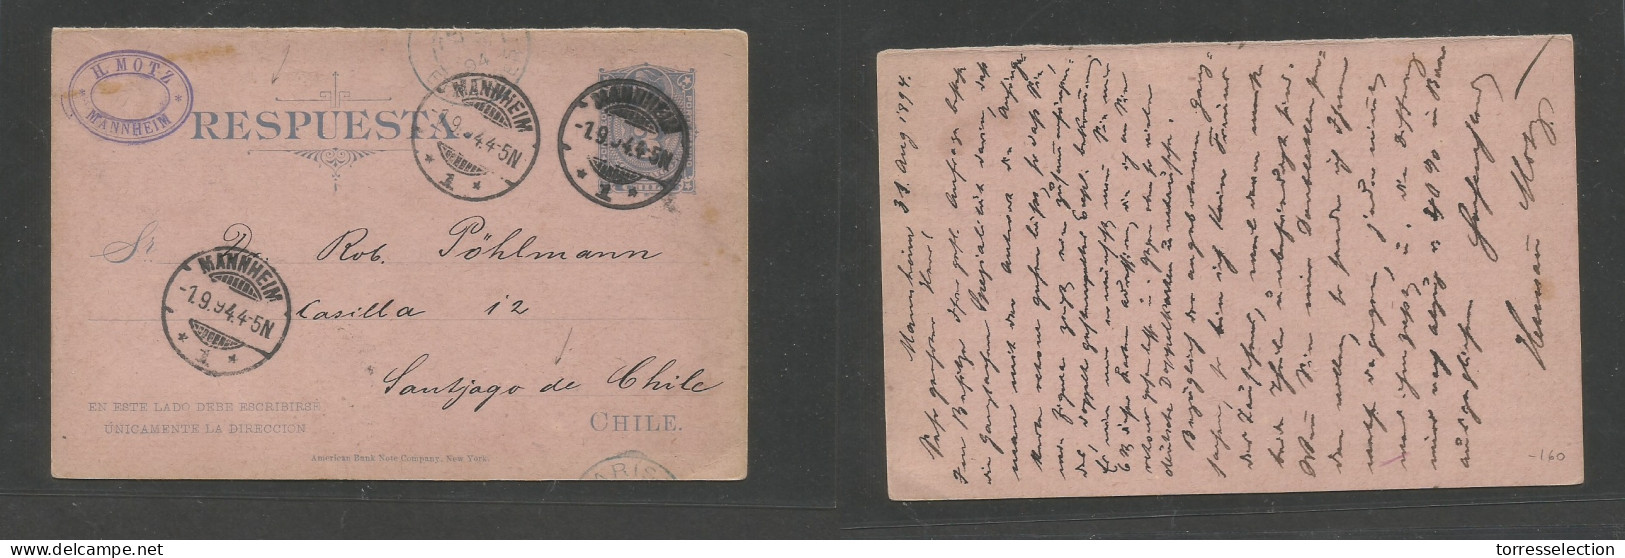 CHILE - Stationery. 1894 (1 Sept) REPLY HALF PROPER USAGE. Germany, Mannheim - Chile, Santiago. Via France, Paris. Respu - Cile